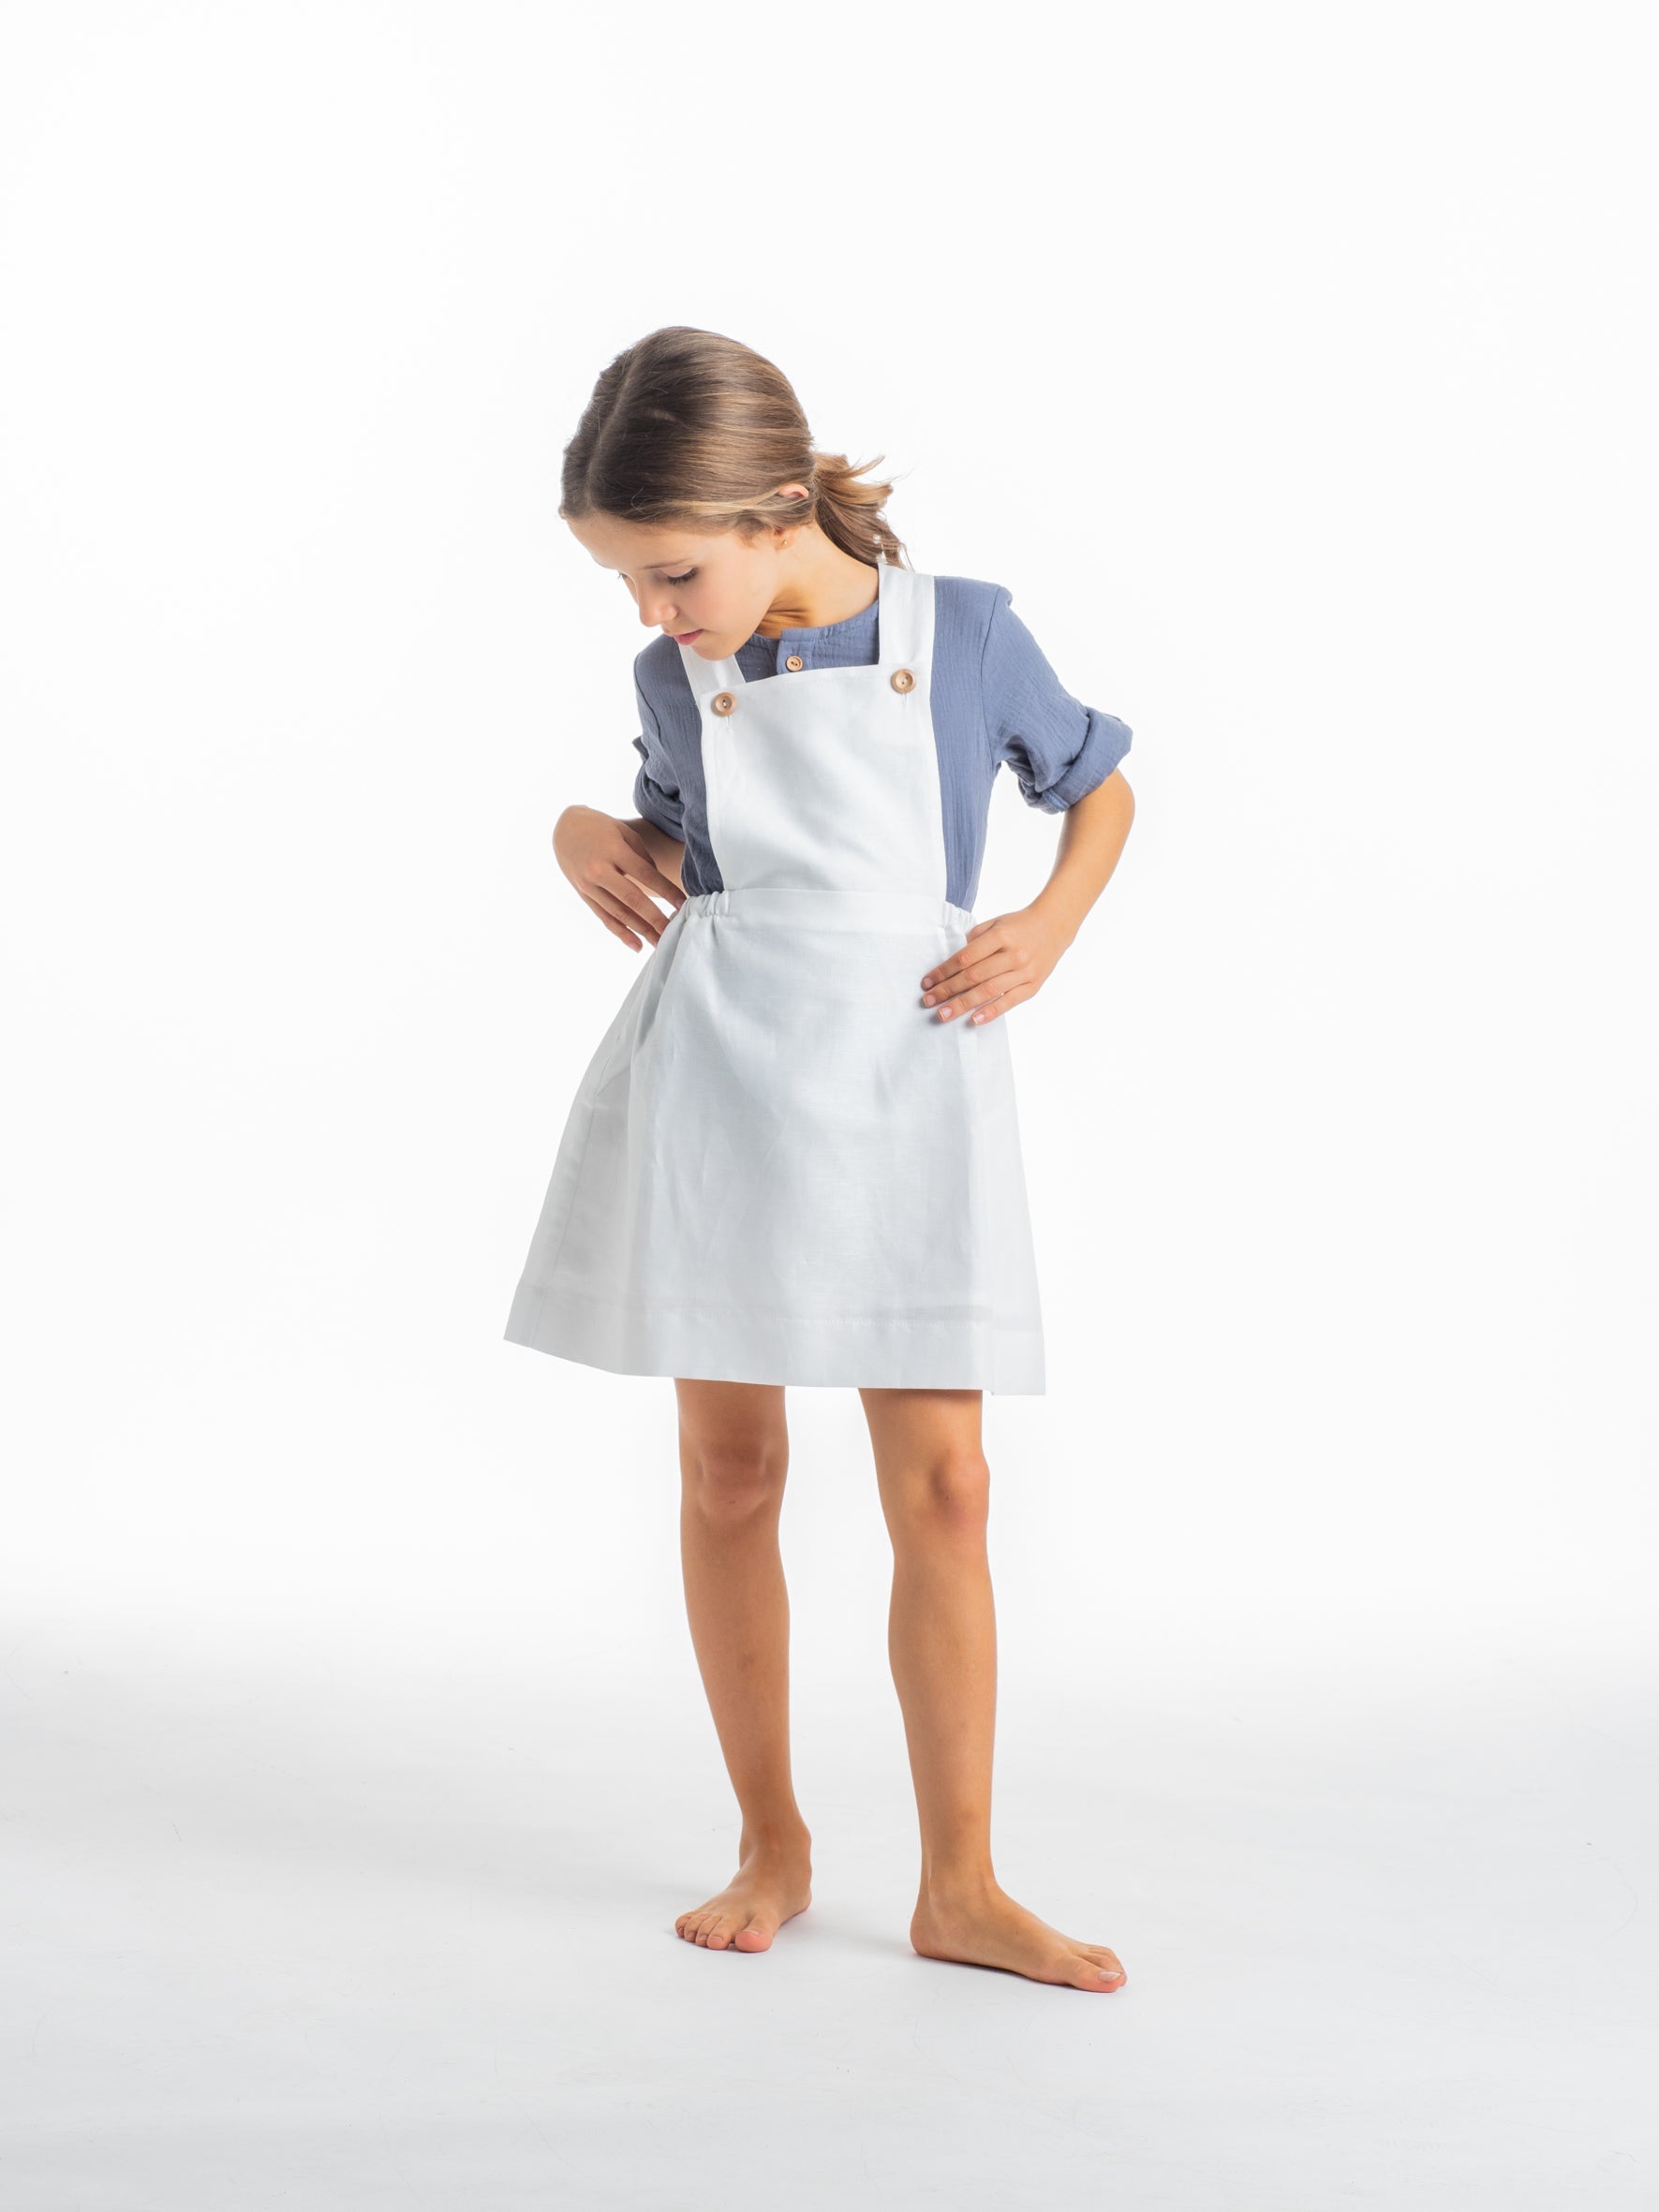 Falda peto lino blanco para niña - Minis Baby&Kids moda niños - Shop